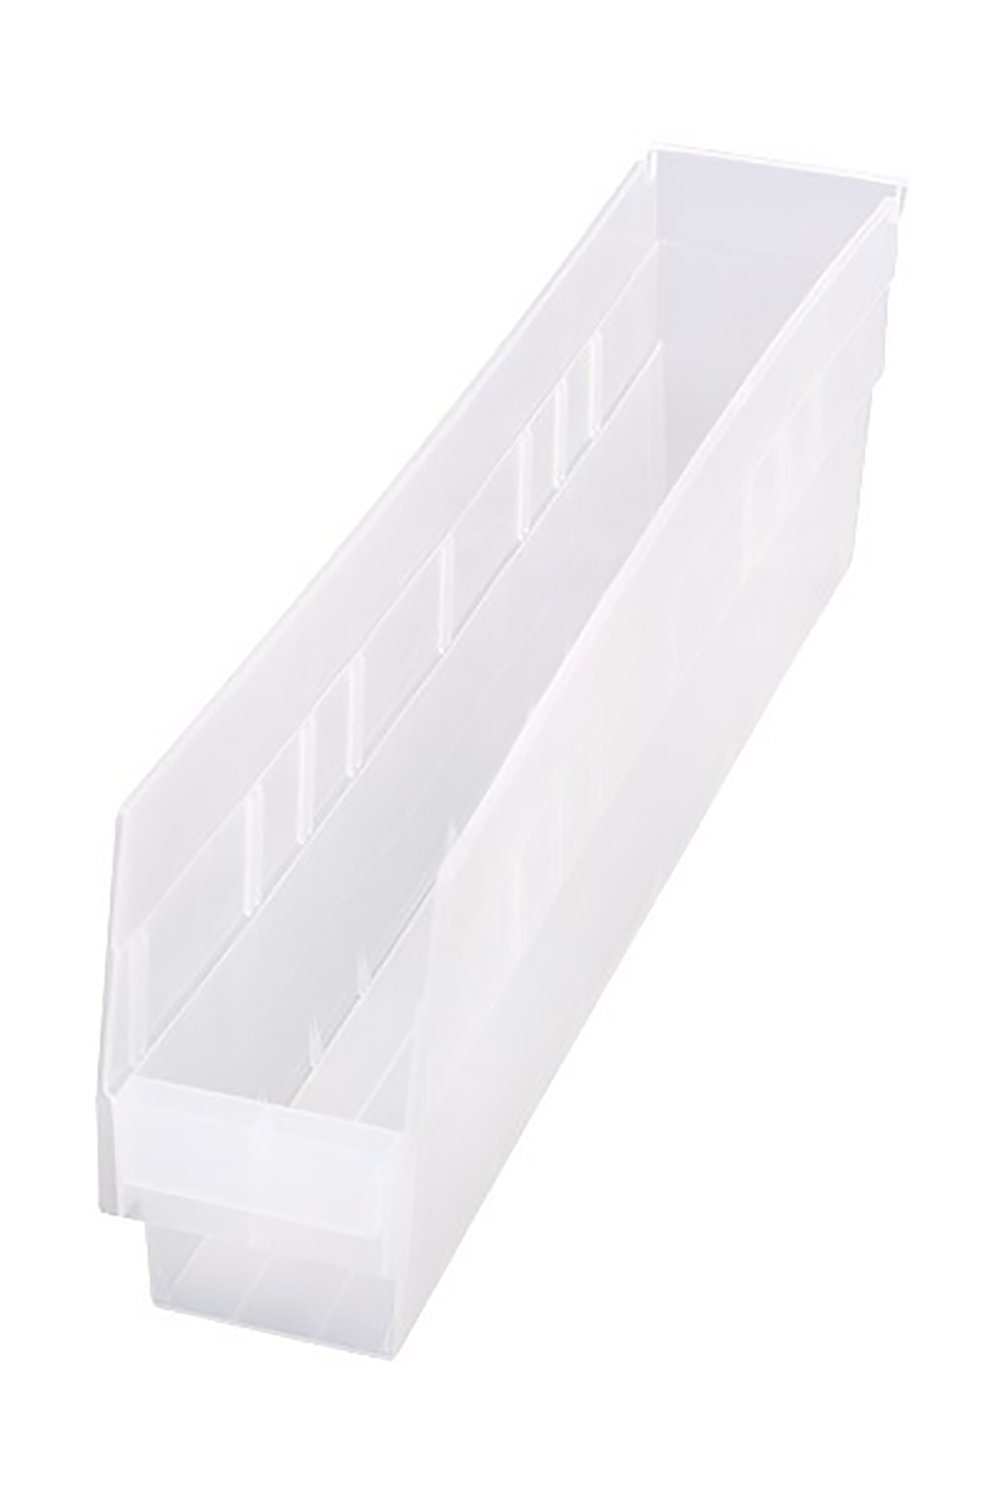 Shelf Bin for 24"D Shelves Bins & Containers Acart 23-5/8" x 4-3/8" x 6" Clear 